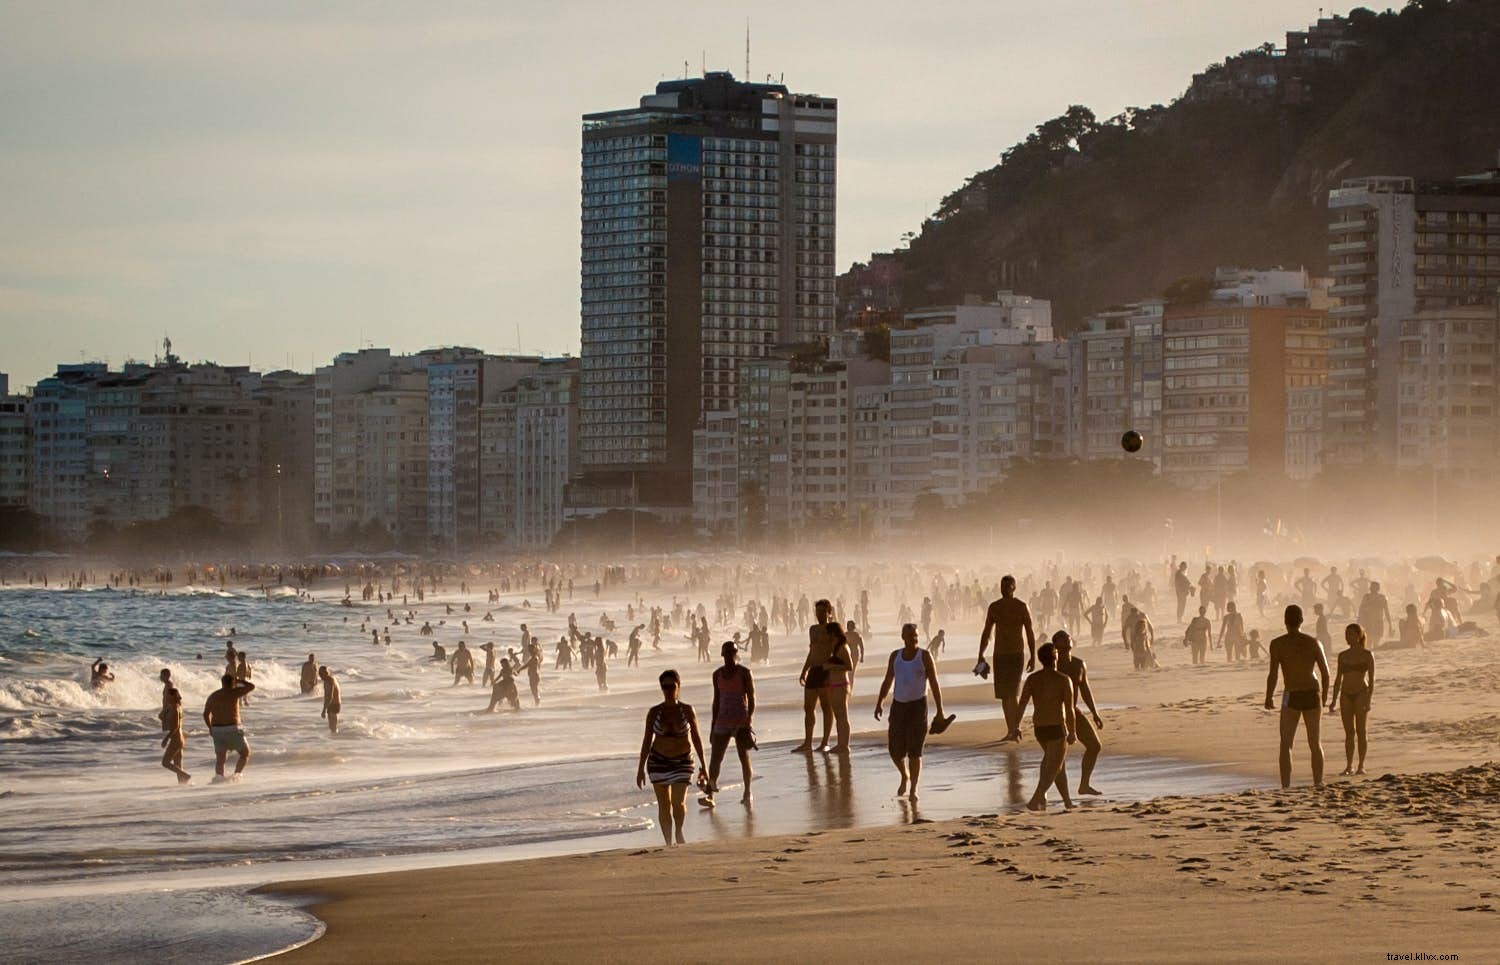 Les 10 meilleurs sites touristiques de Rio de Janeiro 